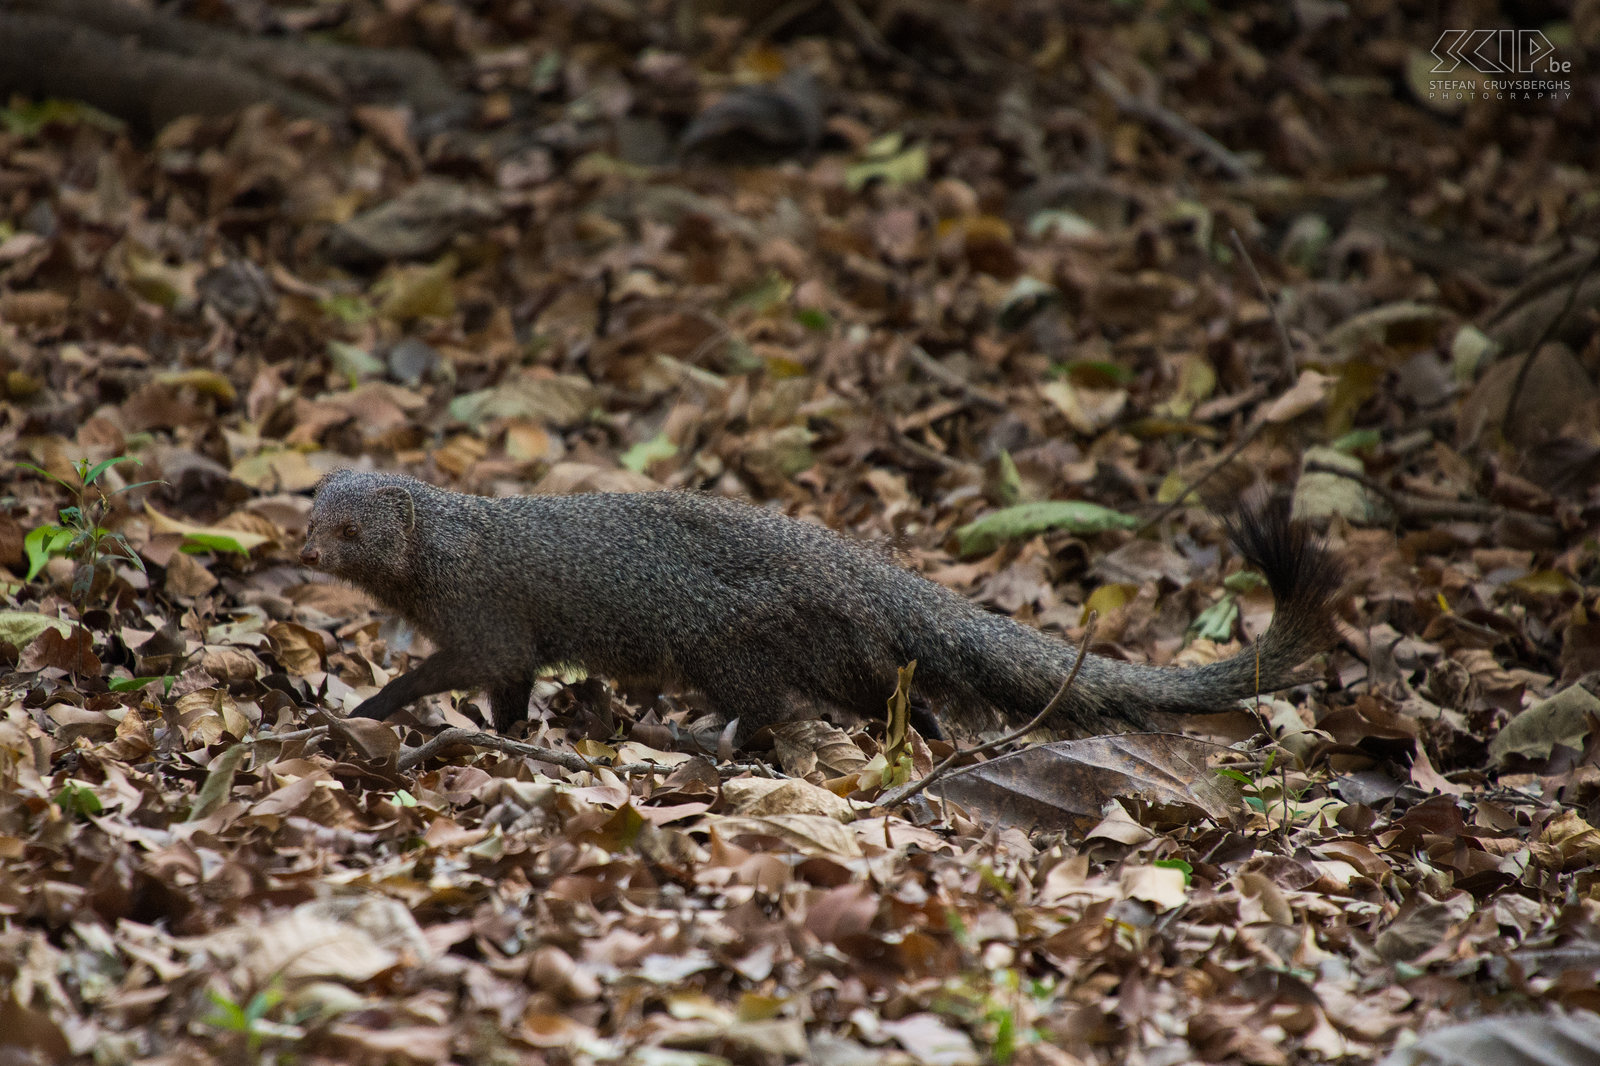 Tadoba - Ruddy mongoose (Herpestes smithii) Stefan Cruysberghs